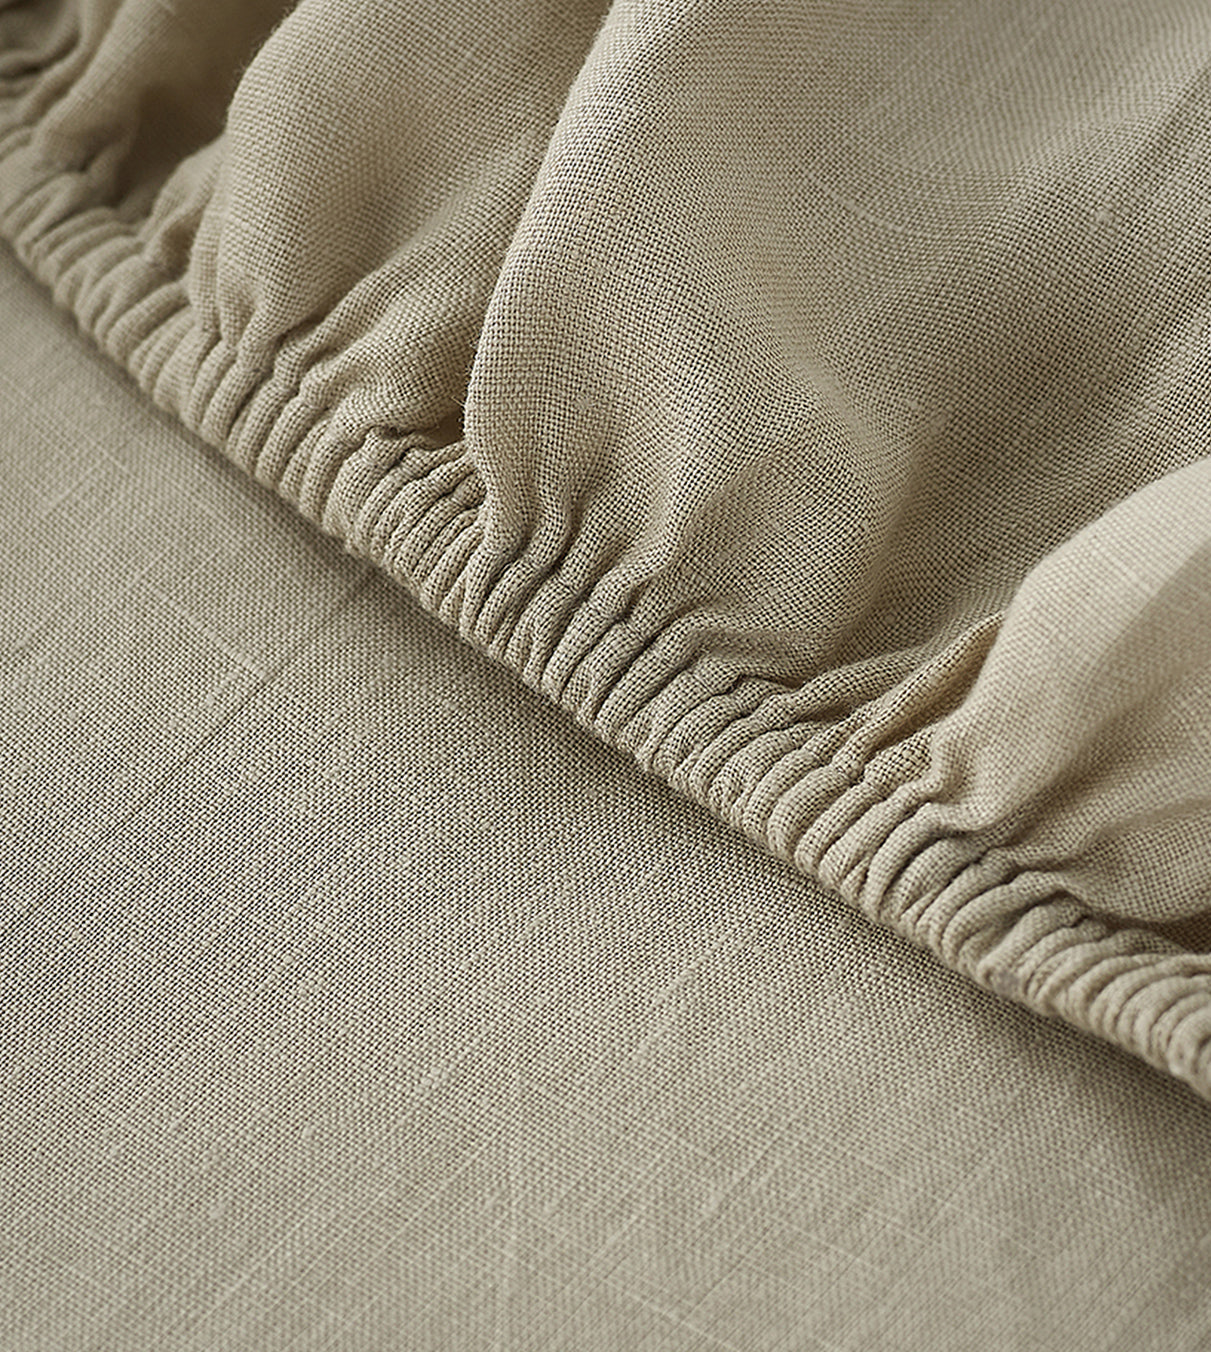 Product: French Linen Sheet Set | Color: Khaki